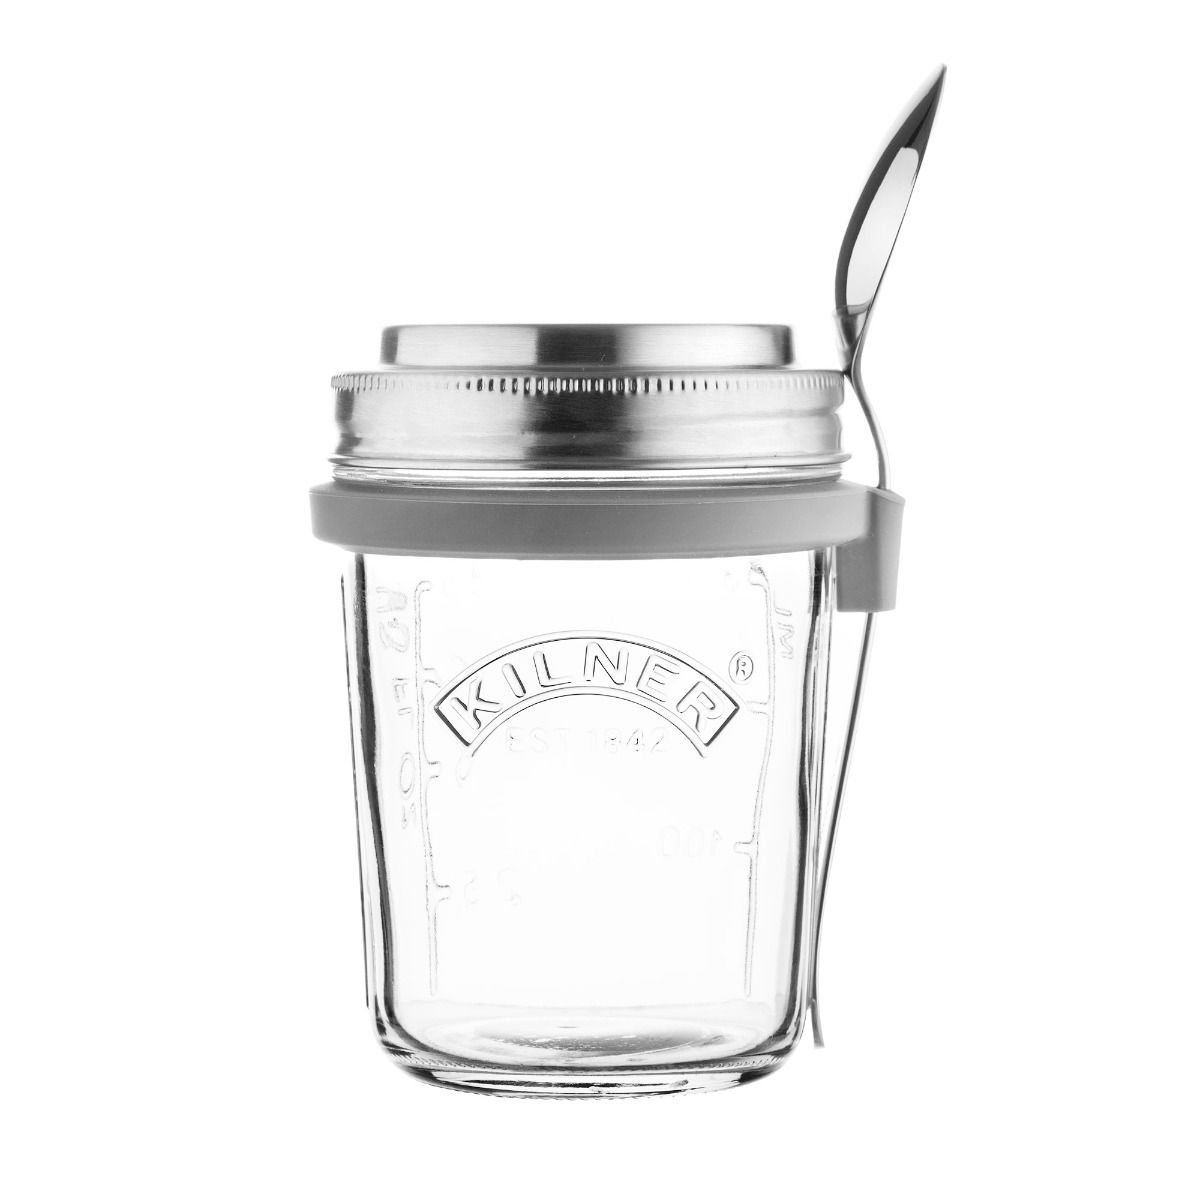 Overnight Oats Container Jar (2-Piece Set) - 18.5 oz Glass